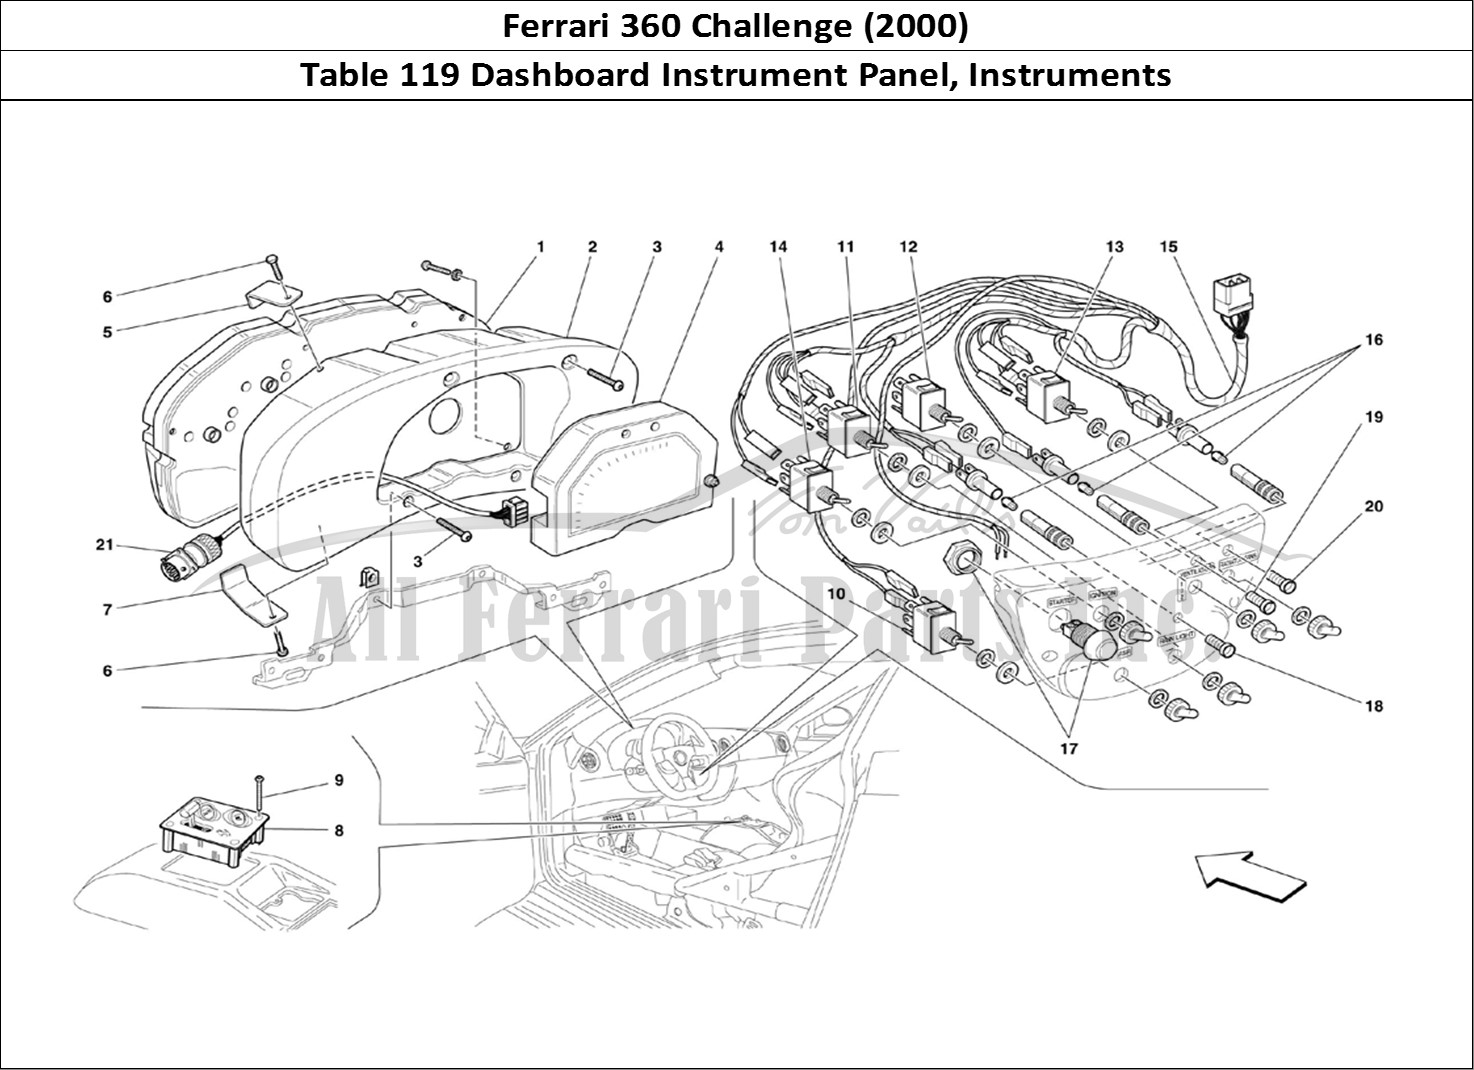 Ferrari Parts Ferrari 360 Challenge (2000) Page 119 Dashboard Instruments